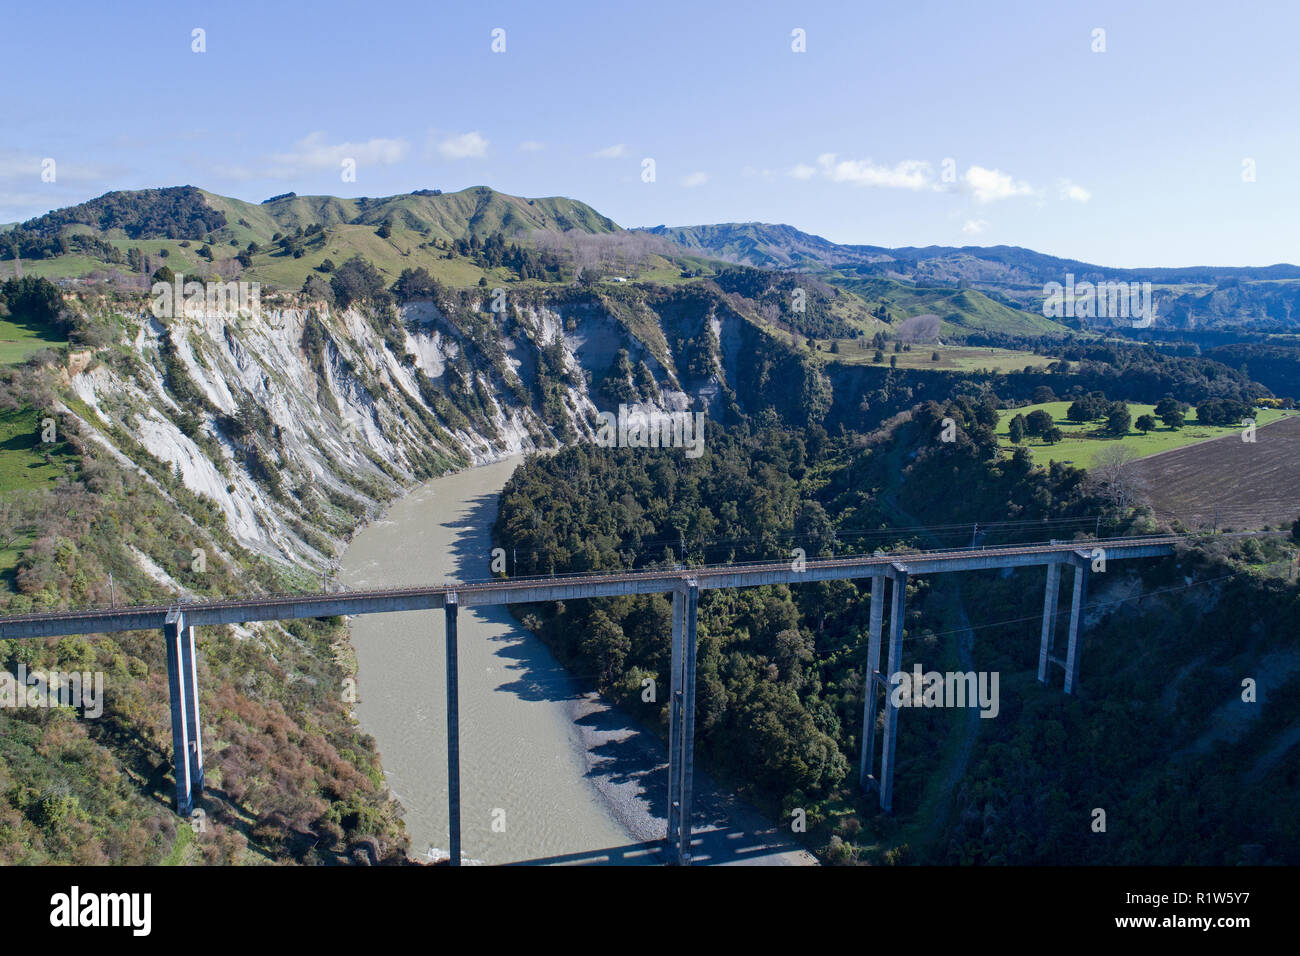 Mangaweka Railway Viaduct, and Rangitikei River, near Mangaweka, Rangitikei, North Island, New Zealand - aerial Stock Photo